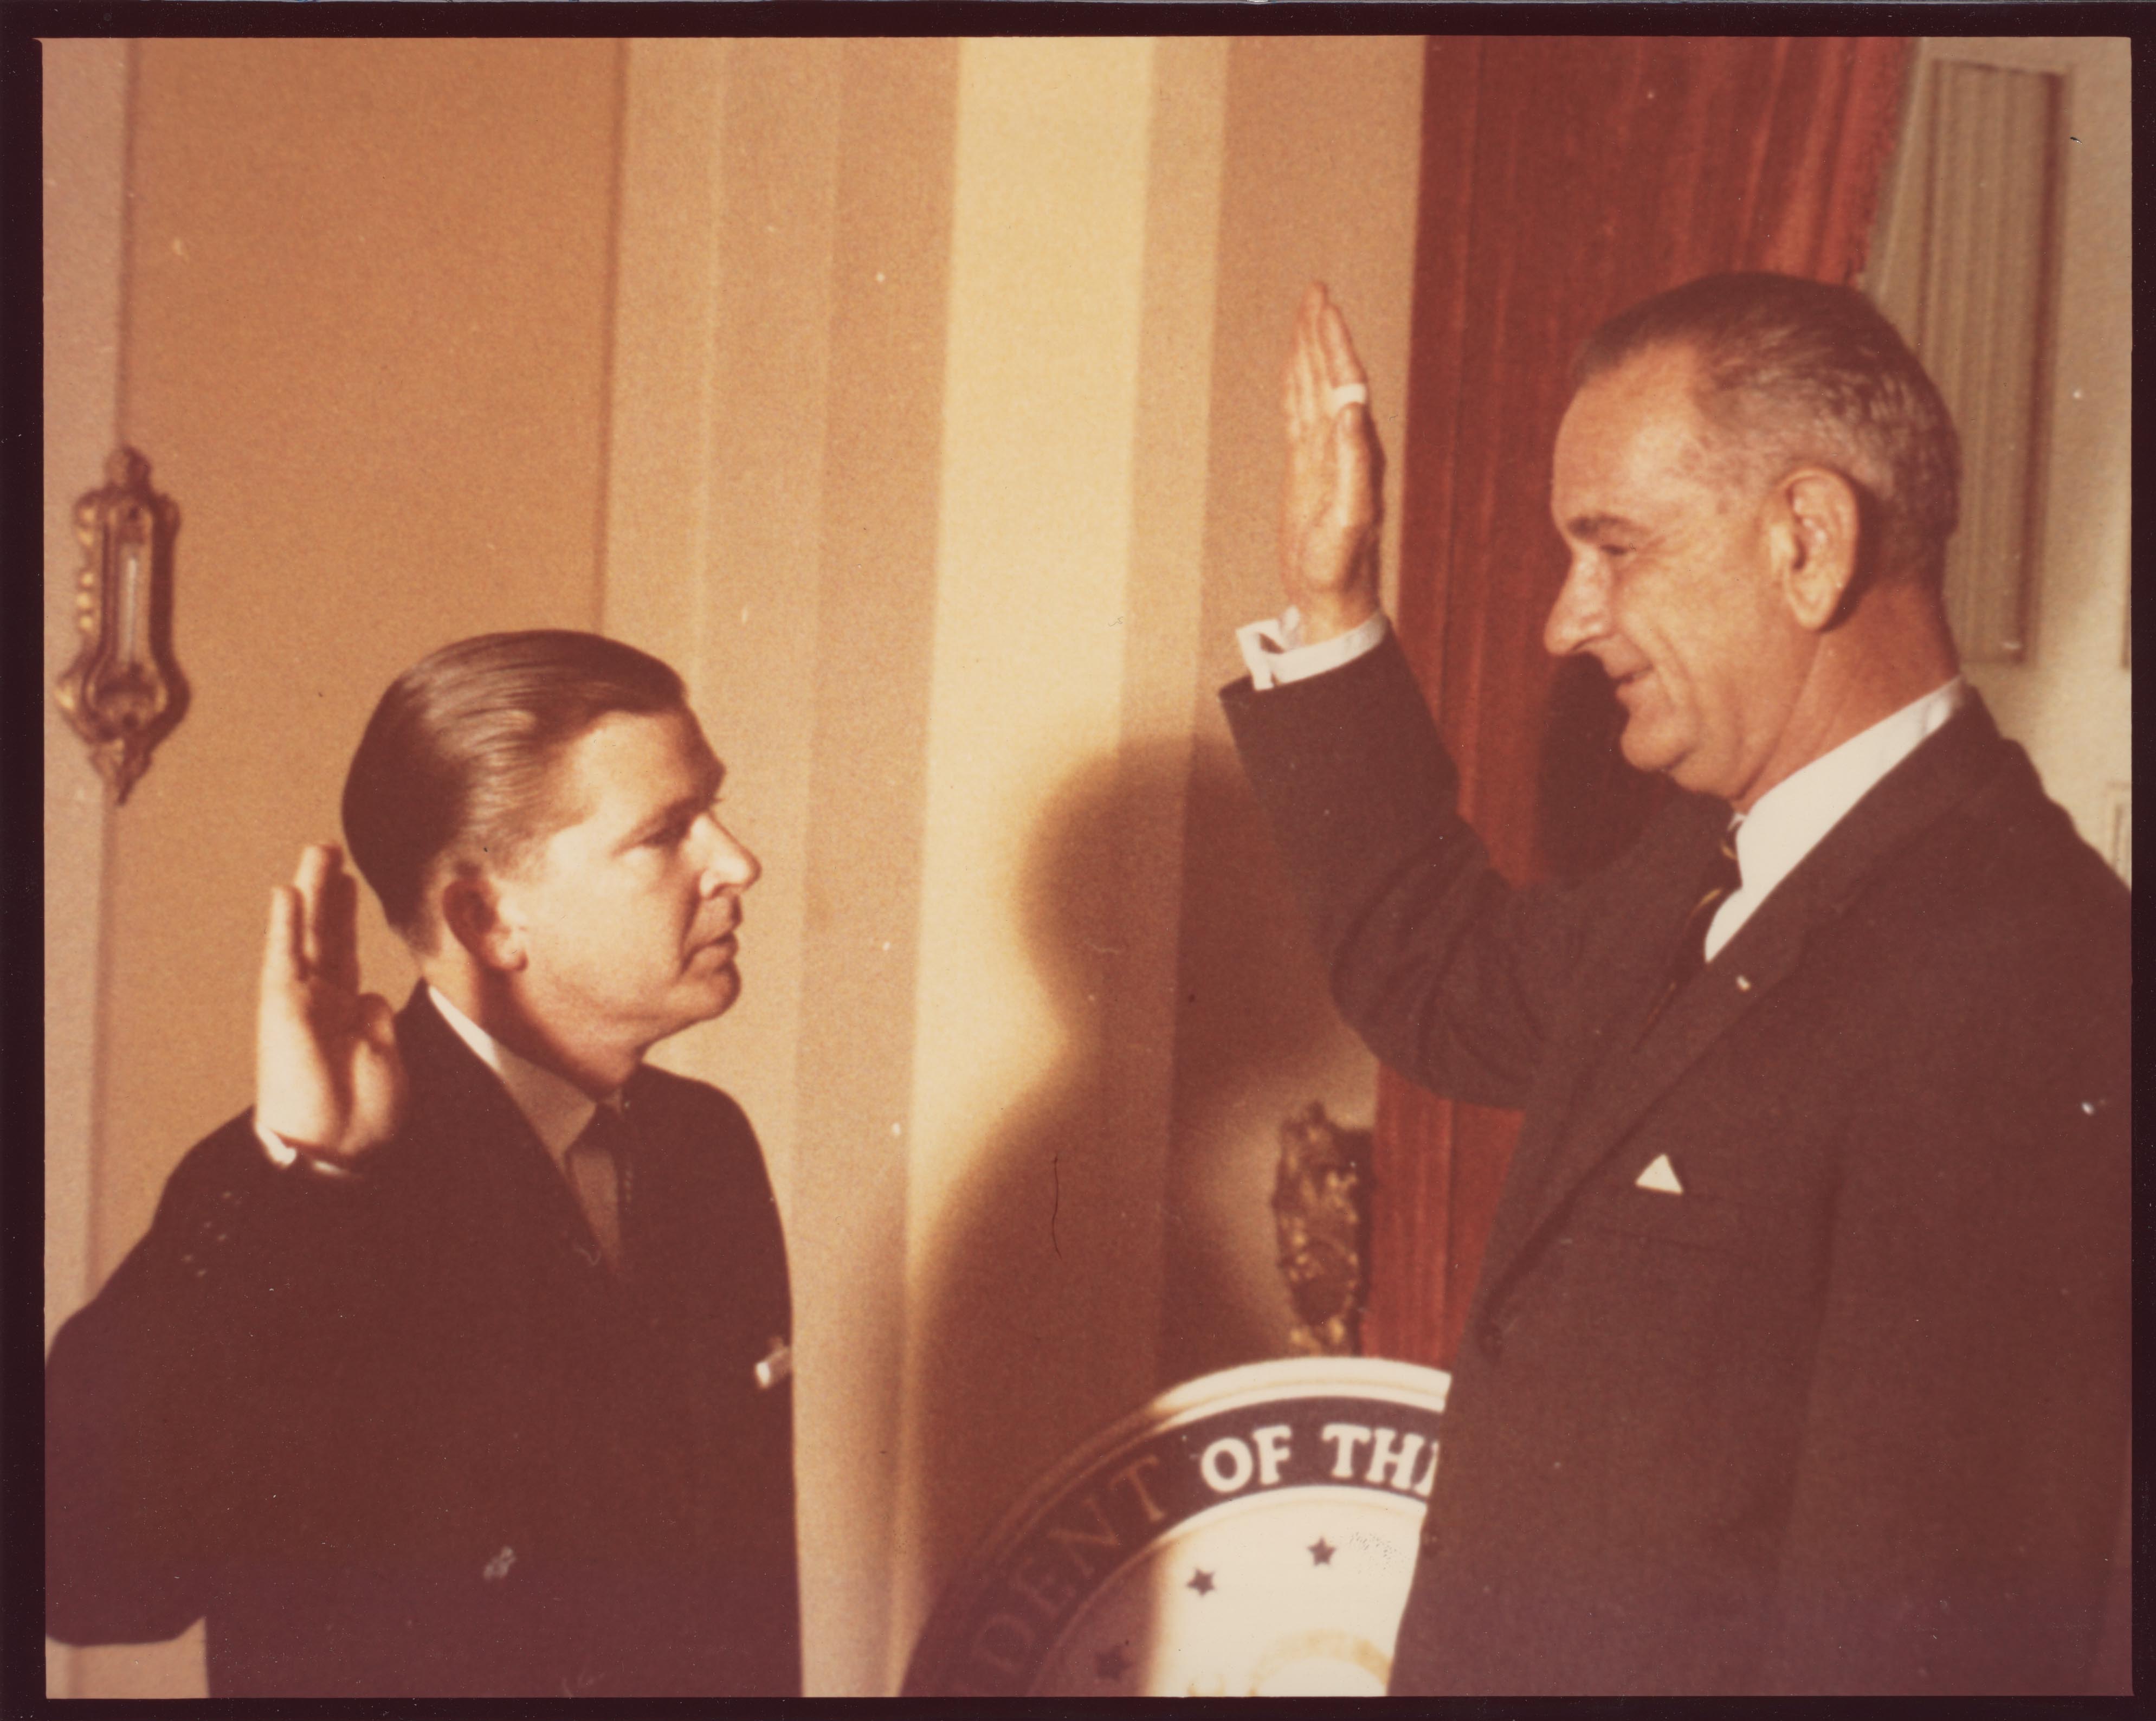 Senator John G. Tower being sworn in by President Lyndon B. Johnson